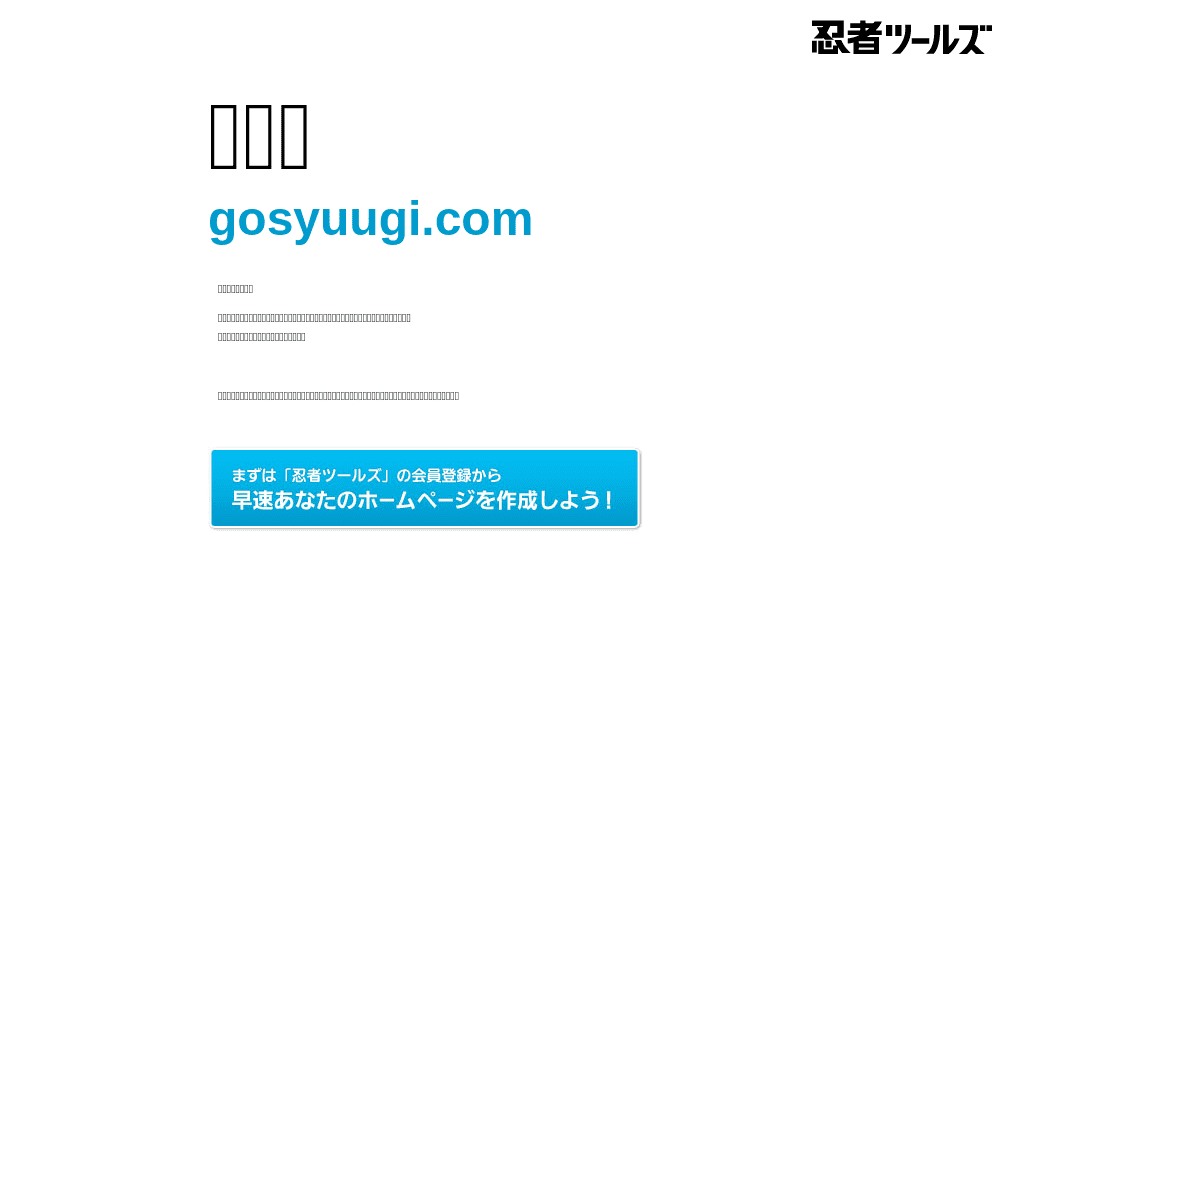 A complete backup of https://gosyuugi.com